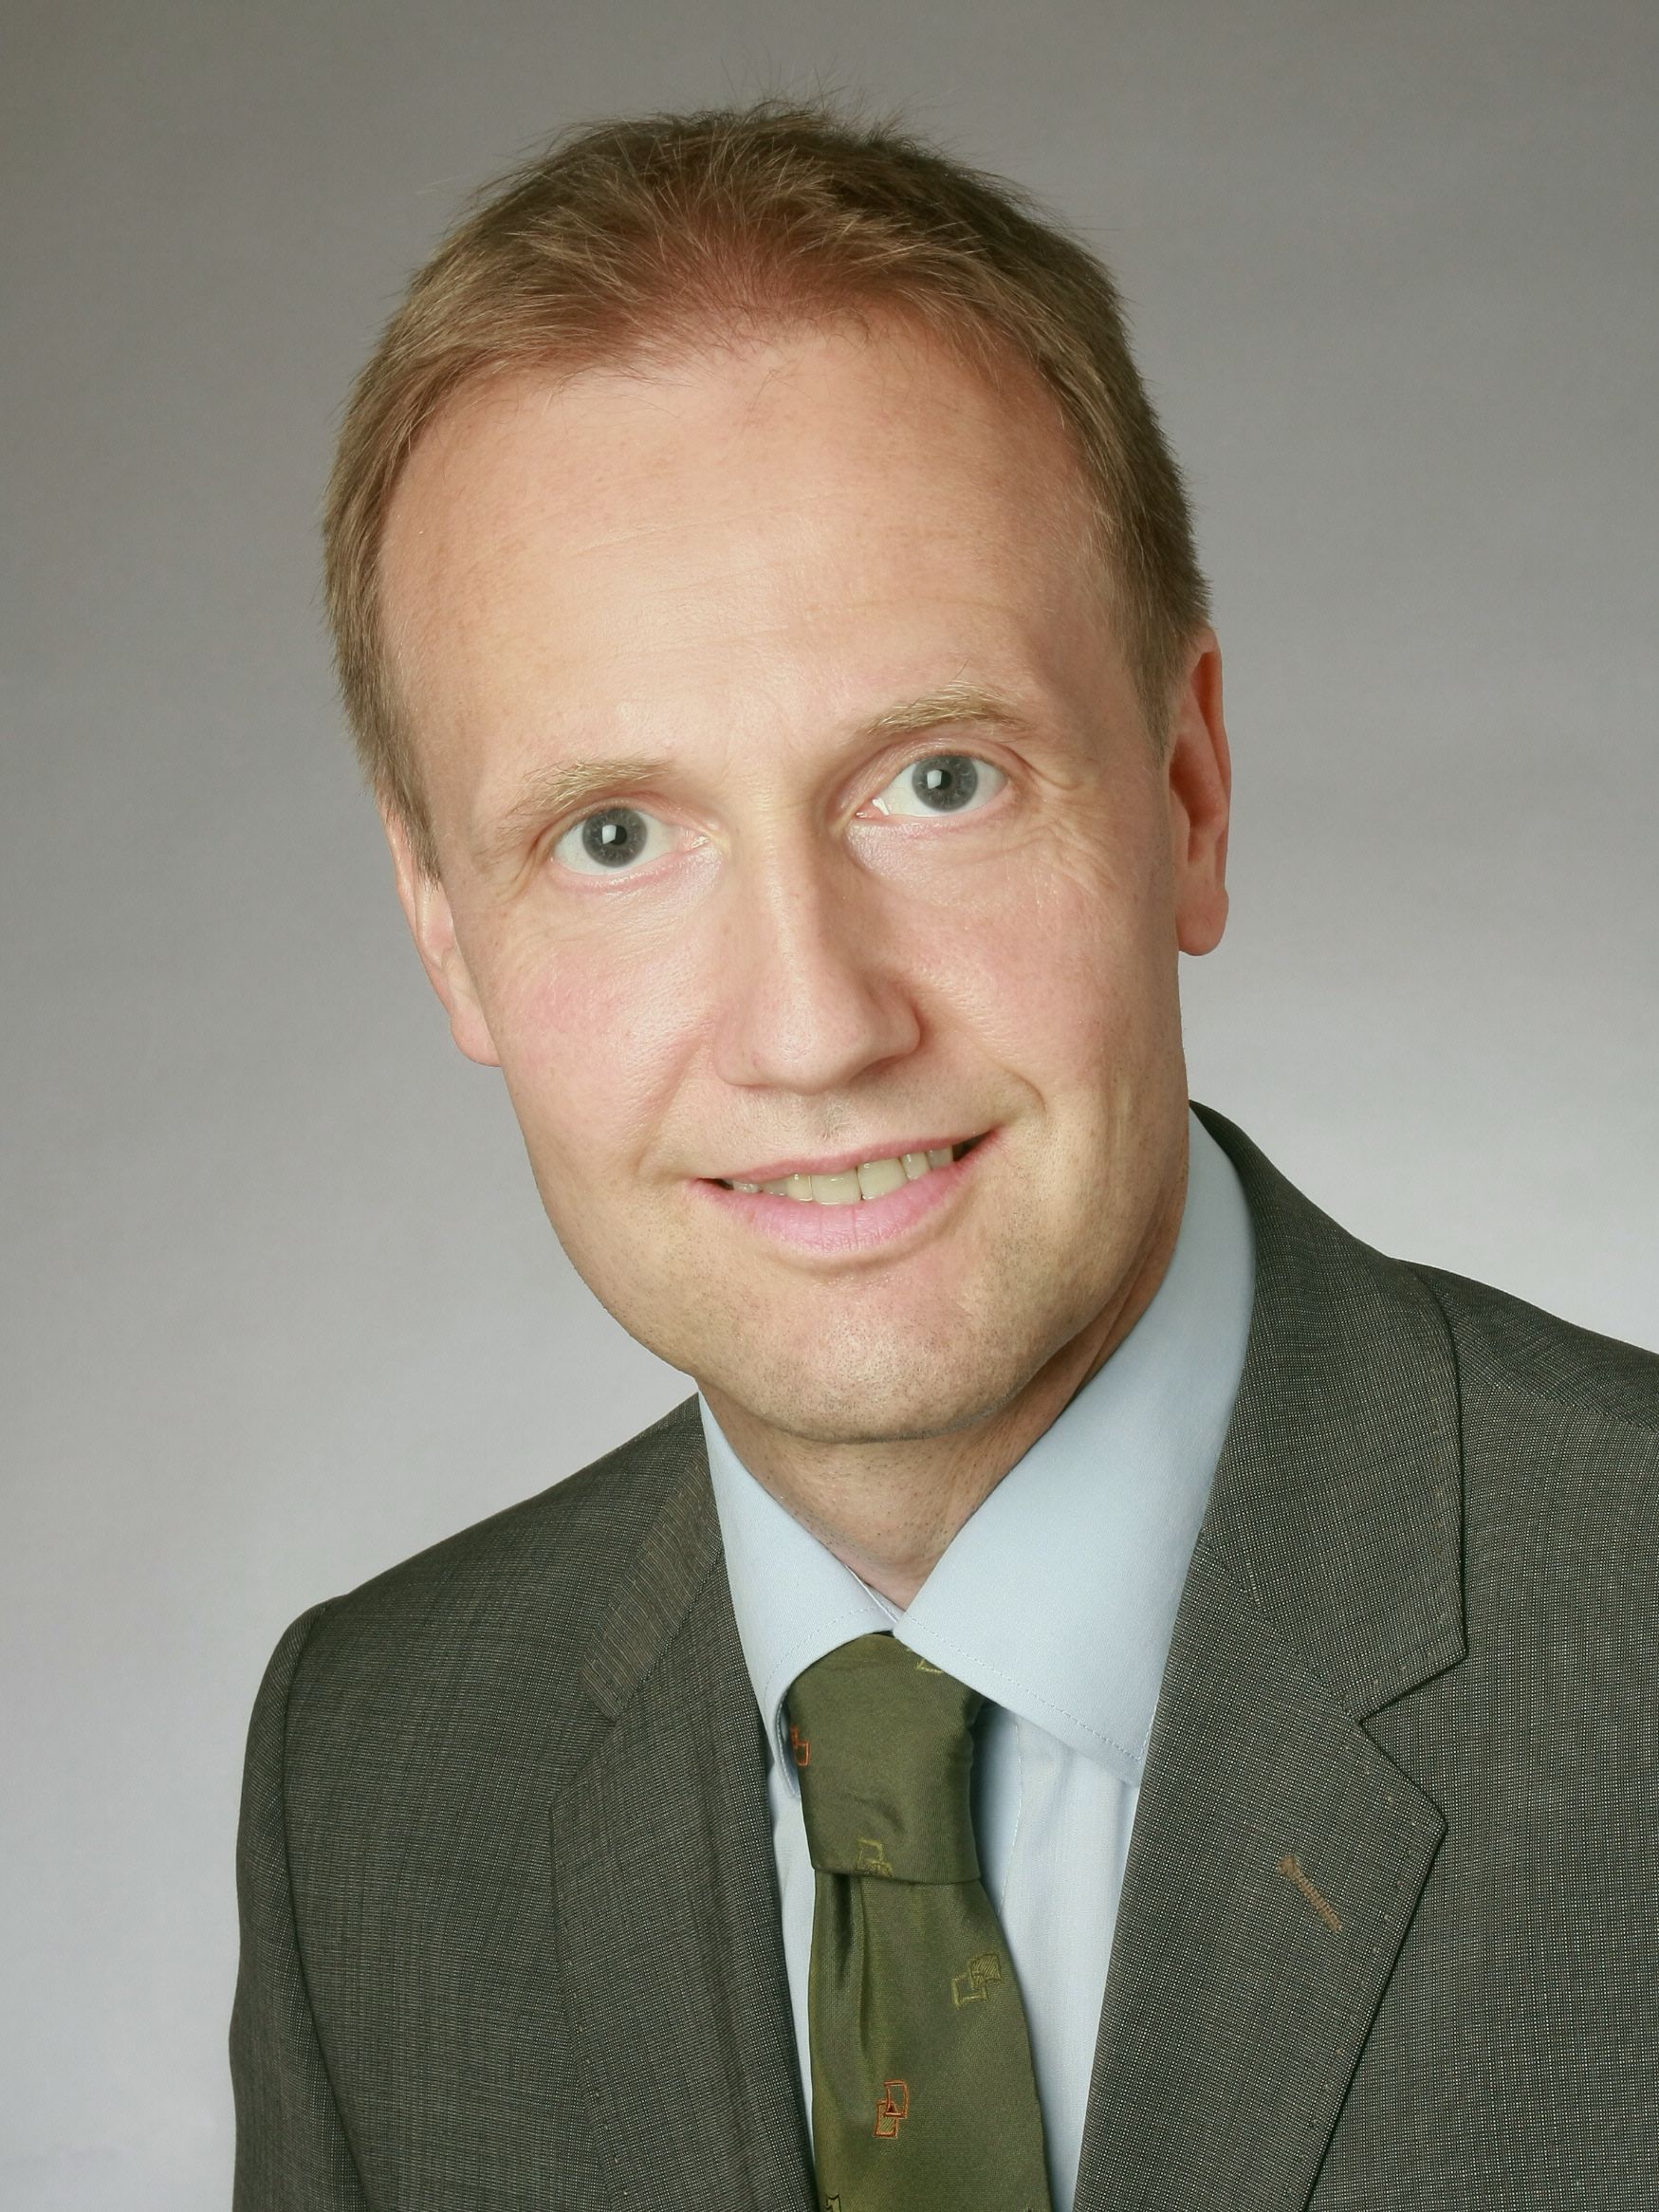 
    
        
                
                        Bürgermeister Bernd Welser
                    
            
    
